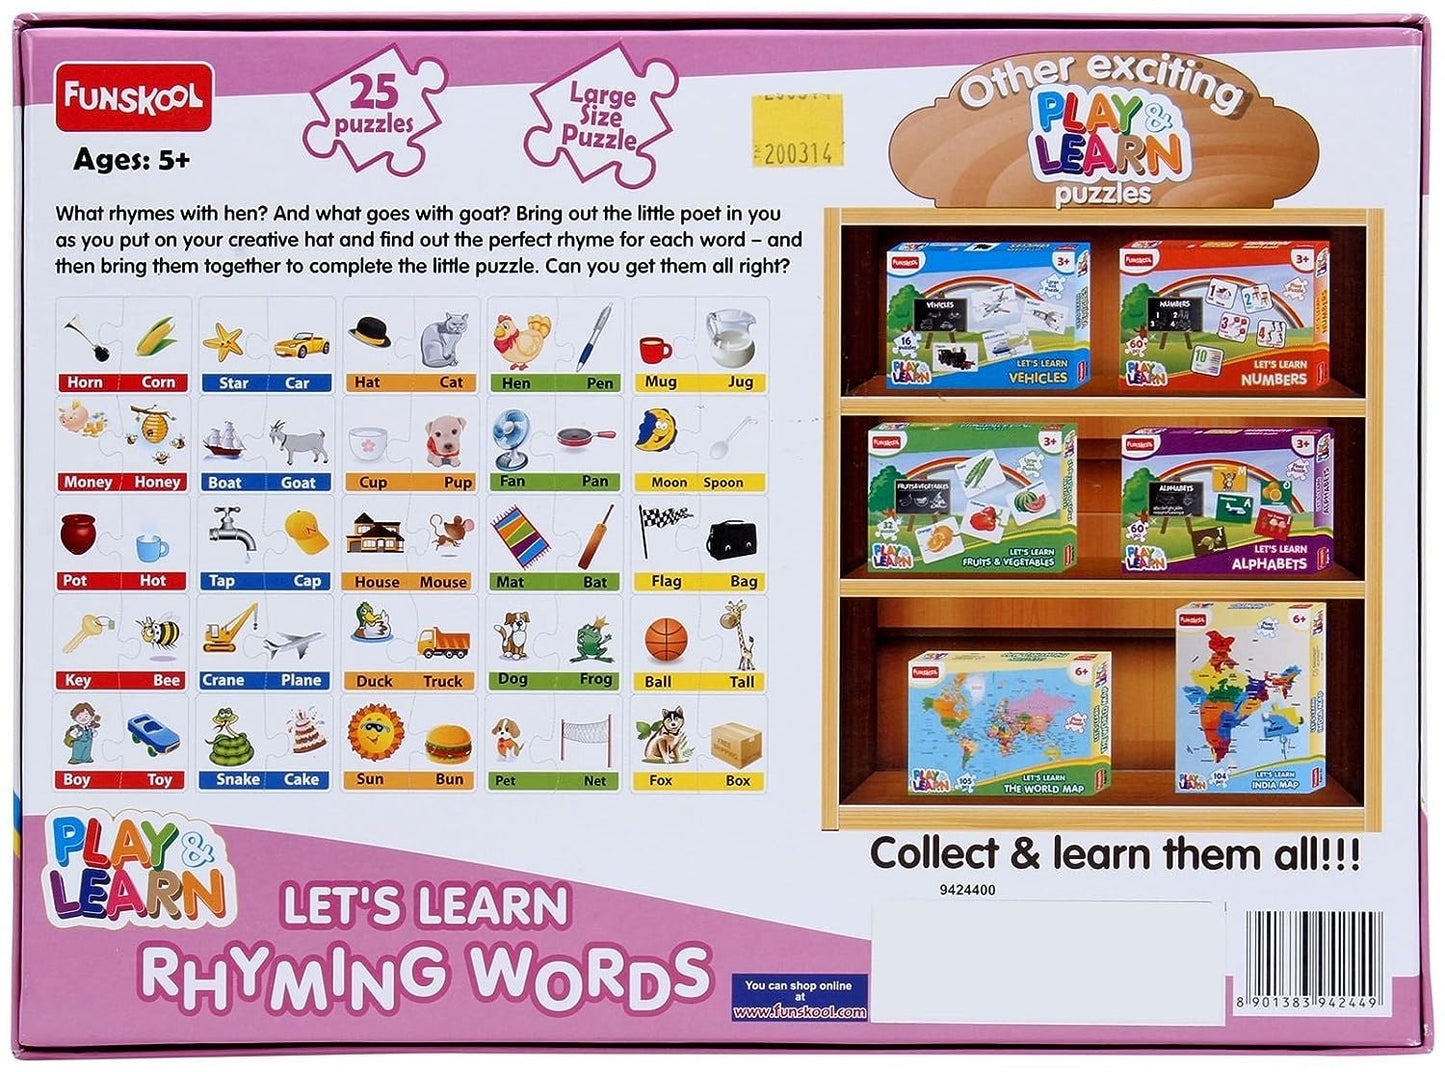 Funskool - Play & Learn Rhyming Words, 5+ Kids Education, Learning Game, Multi-Color